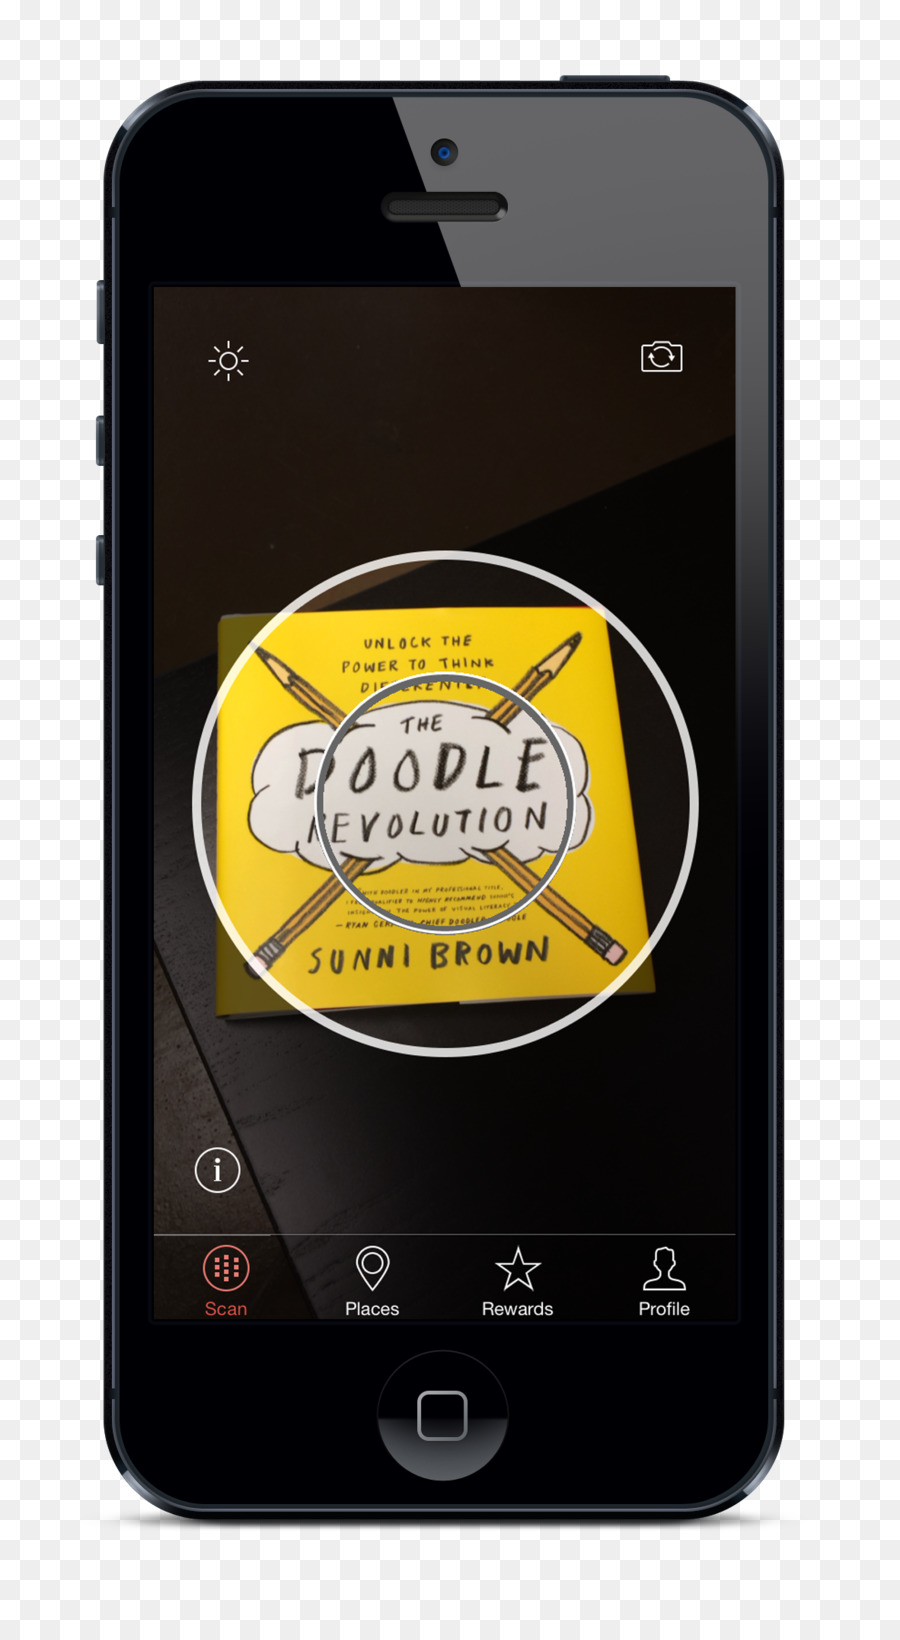 Feature-phone-Smartphone Den Doodle Revolution: Schalte die Macht, Anders zu Denken-Handy-Zubehör - Smartphone